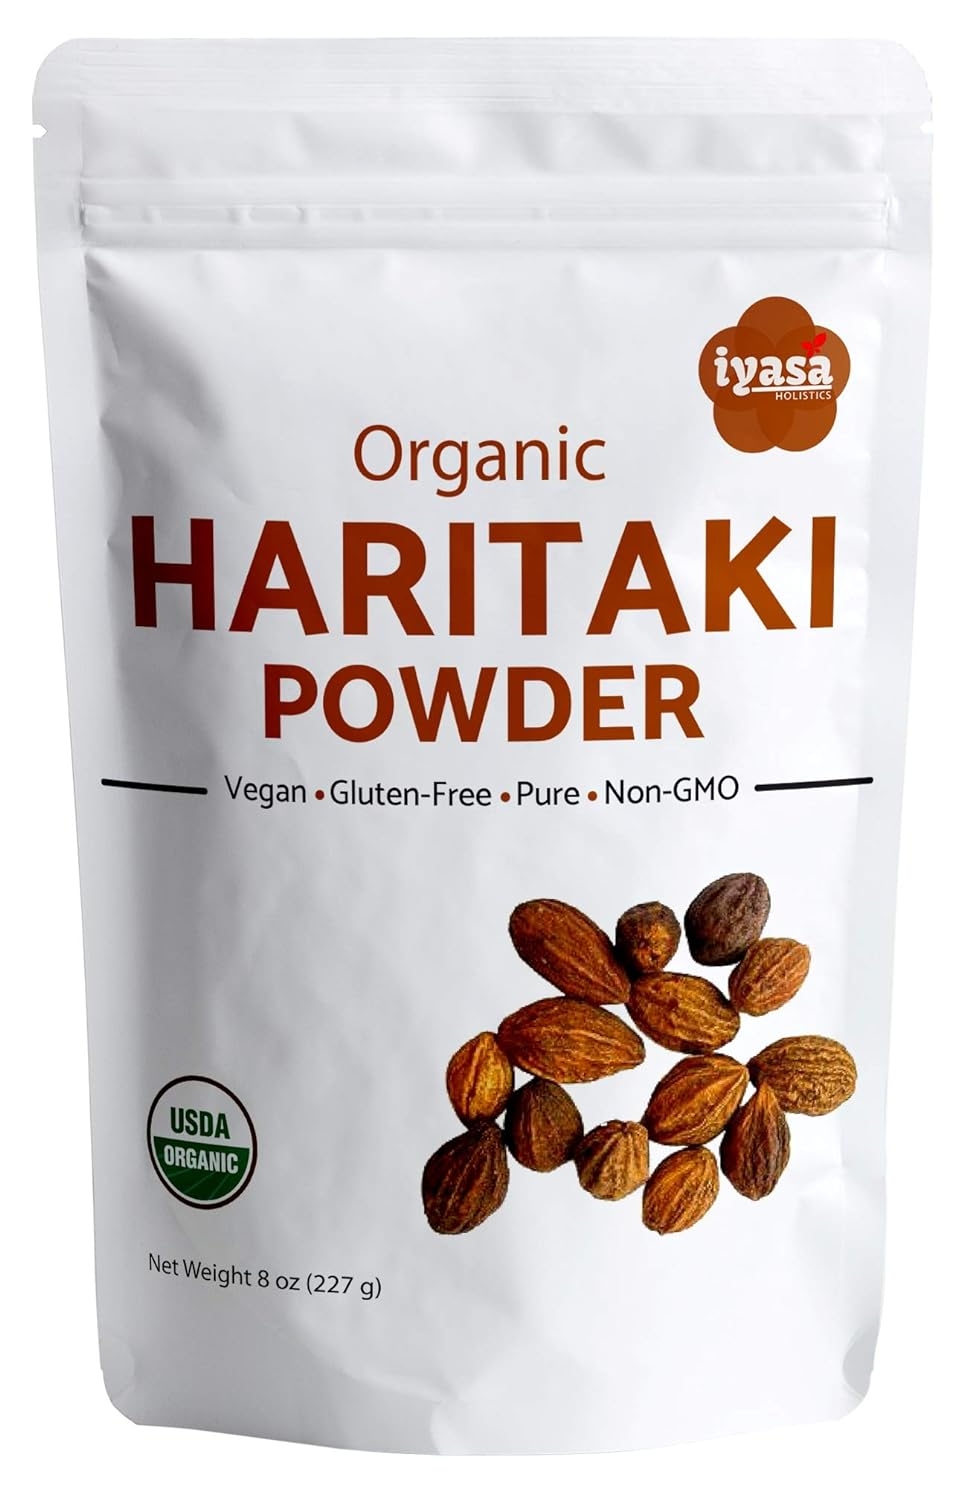 Organic Haritaki Fruit Powder Harde Harad Terminalia chebula Kadakapudi 4Oz 113Gm Digestion Gas Relief Healthy Bowel Function Ayurveda Superfood Resealable Pouch